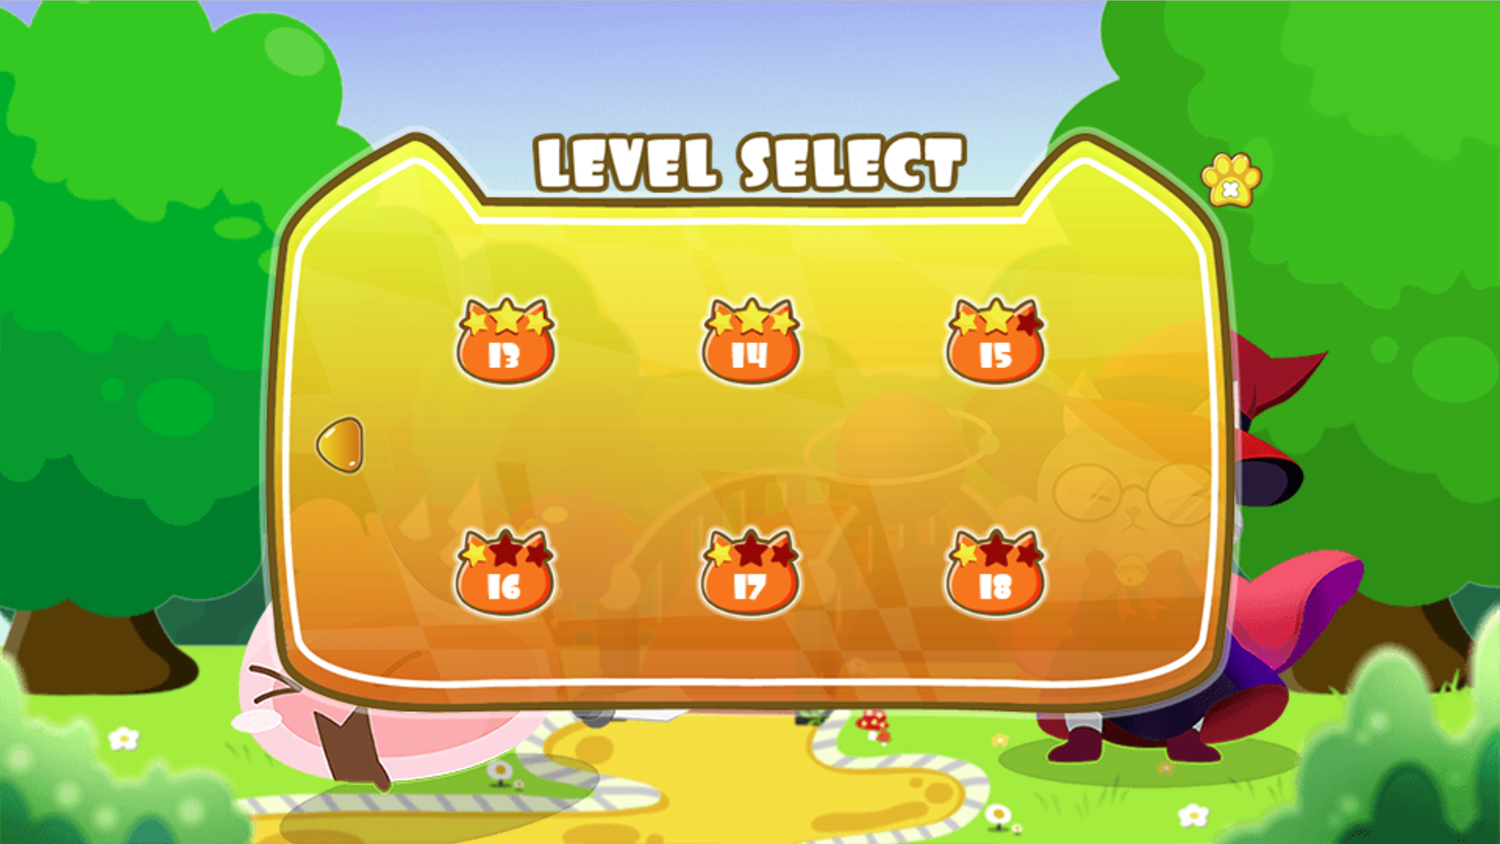 Cat Wizard Defense Game Desert Level Select Screen Screenshot.